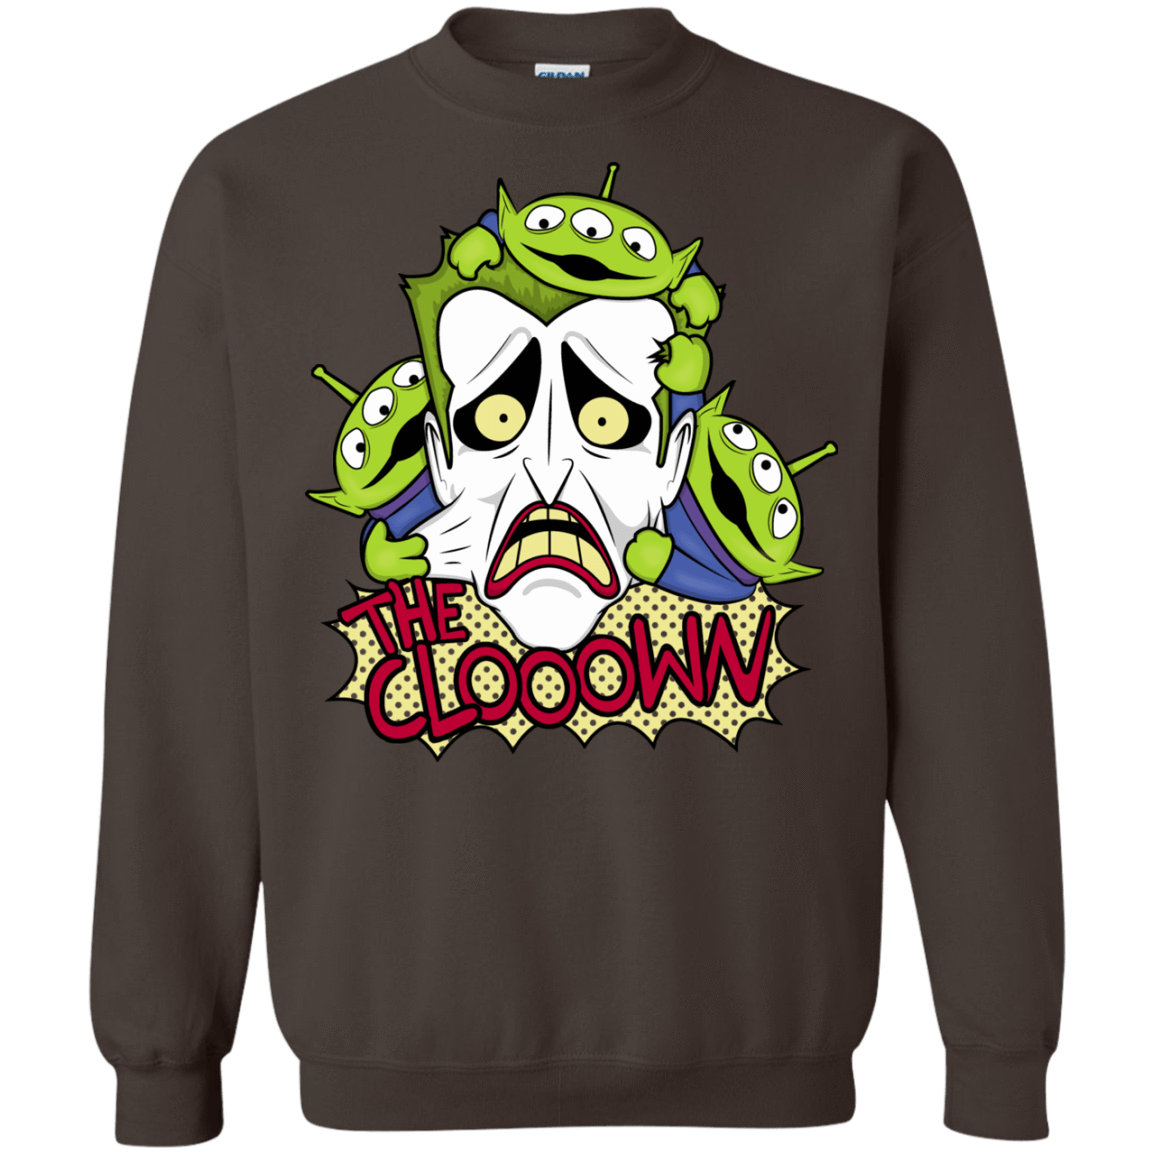 Sweatshirts Dark Chocolate / Small The clooown Crewneck Sweatshirt